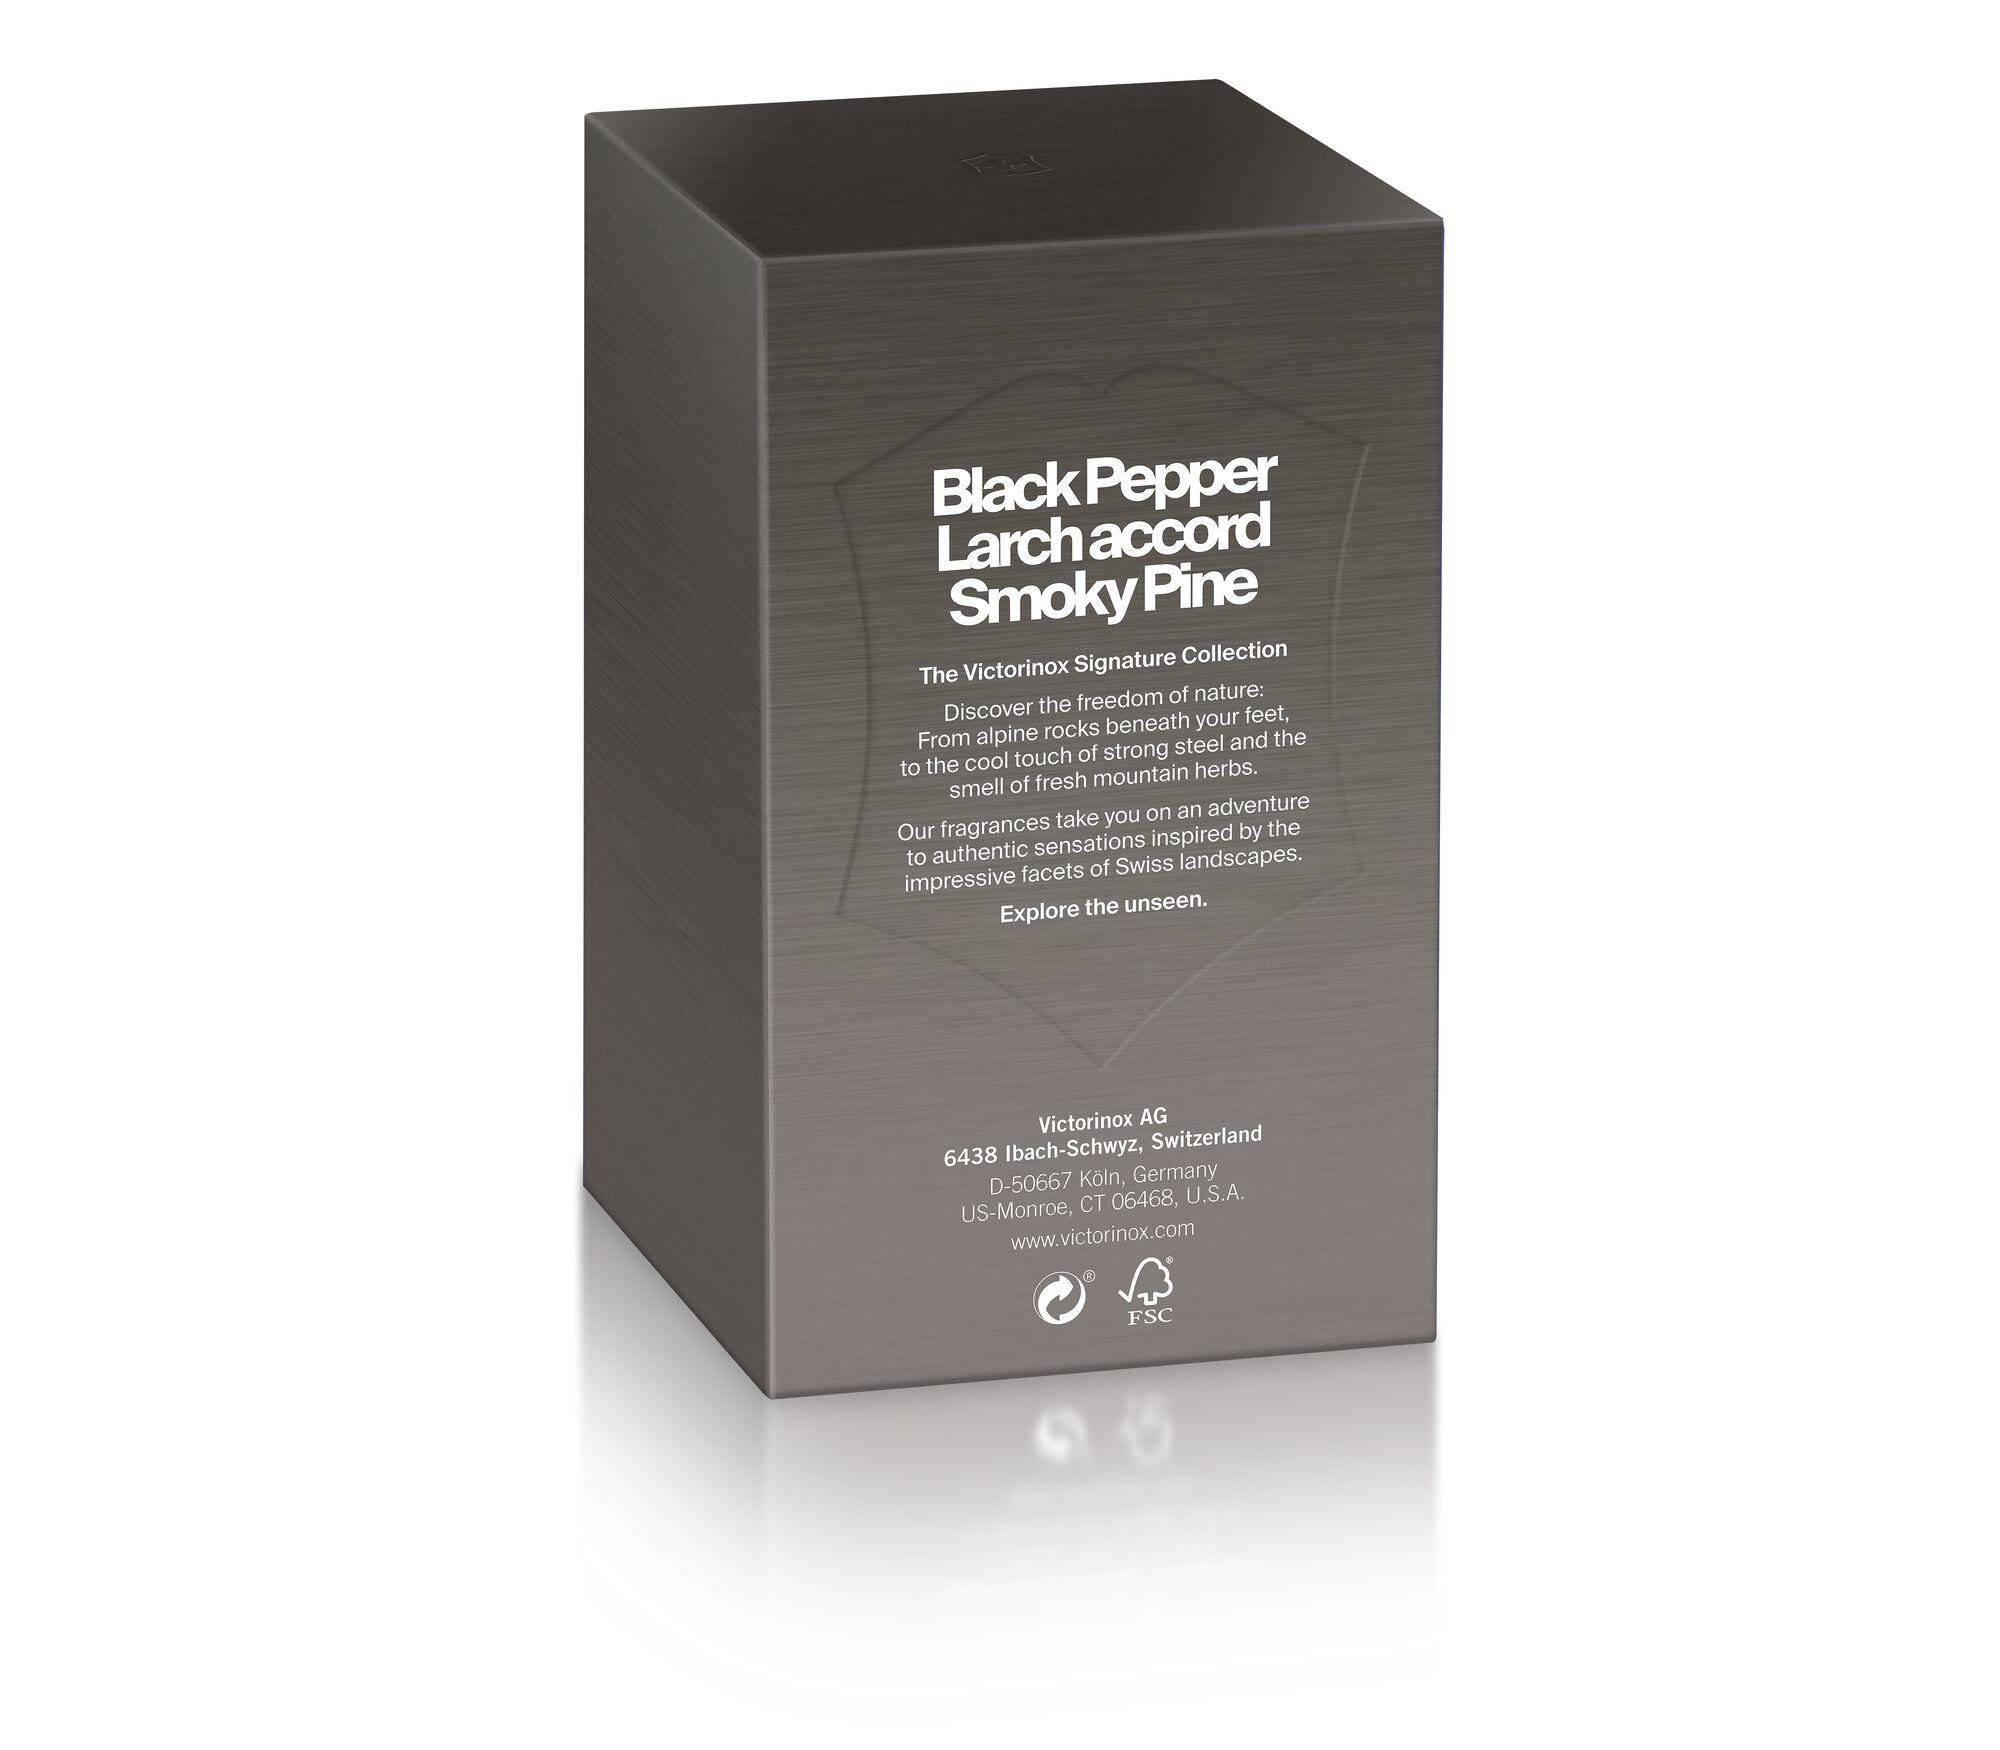 Victorinox Eau Black black Steel Pepper pikant 100ml Toilette Herrenduft EdT Spray de